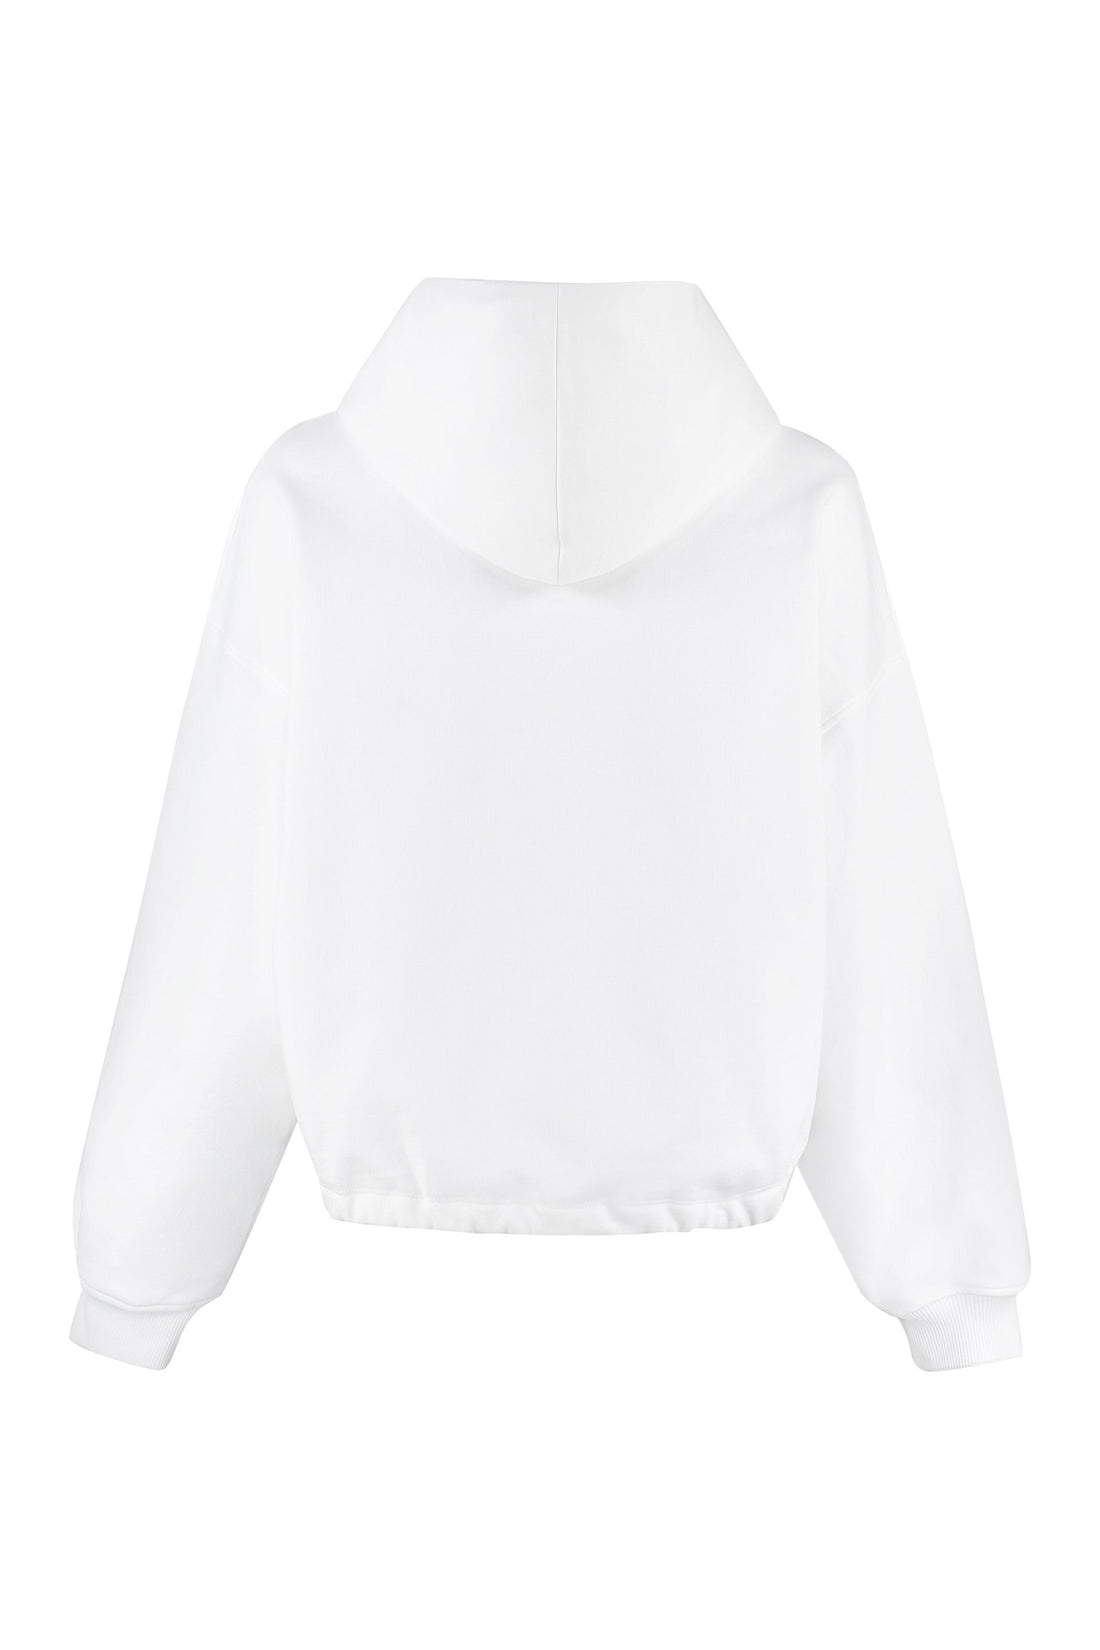 Valentino-OUTLET-SALE-Cotton hoodie-ARCHIVIST